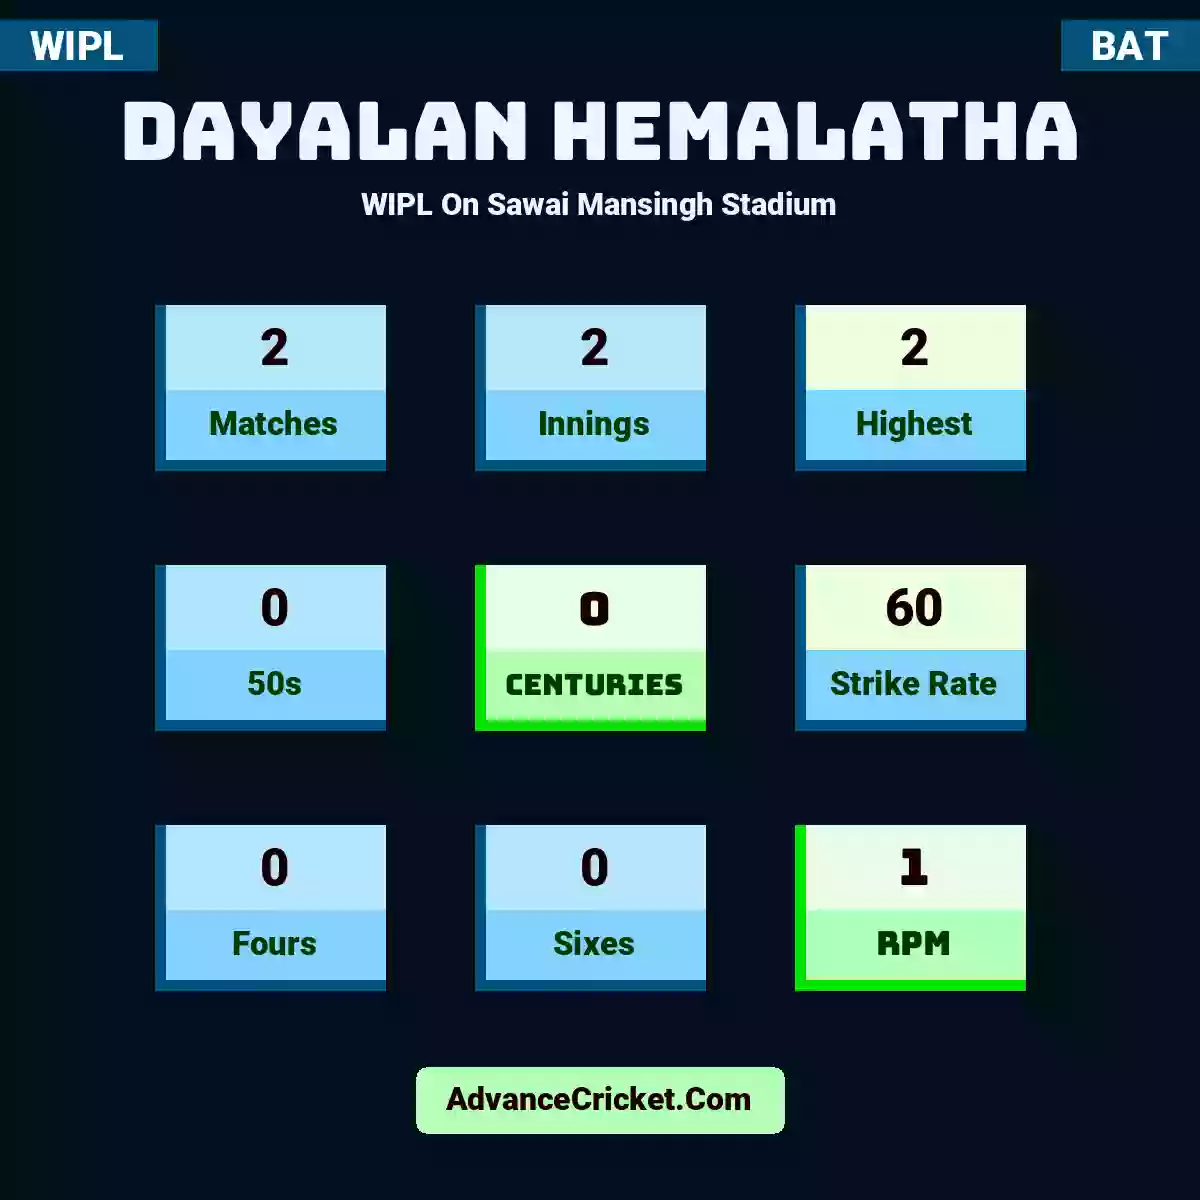 Dayalan Hemalatha WIPL  On Sawai Mansingh Stadium, Dayalan Hemalatha played 2 matches, scored 2 runs as highest, 0 half-centuries, and 0 centuries, with a strike rate of 60. D.Hemalatha hit 0 fours and 0 sixes, with an RPM of 1.